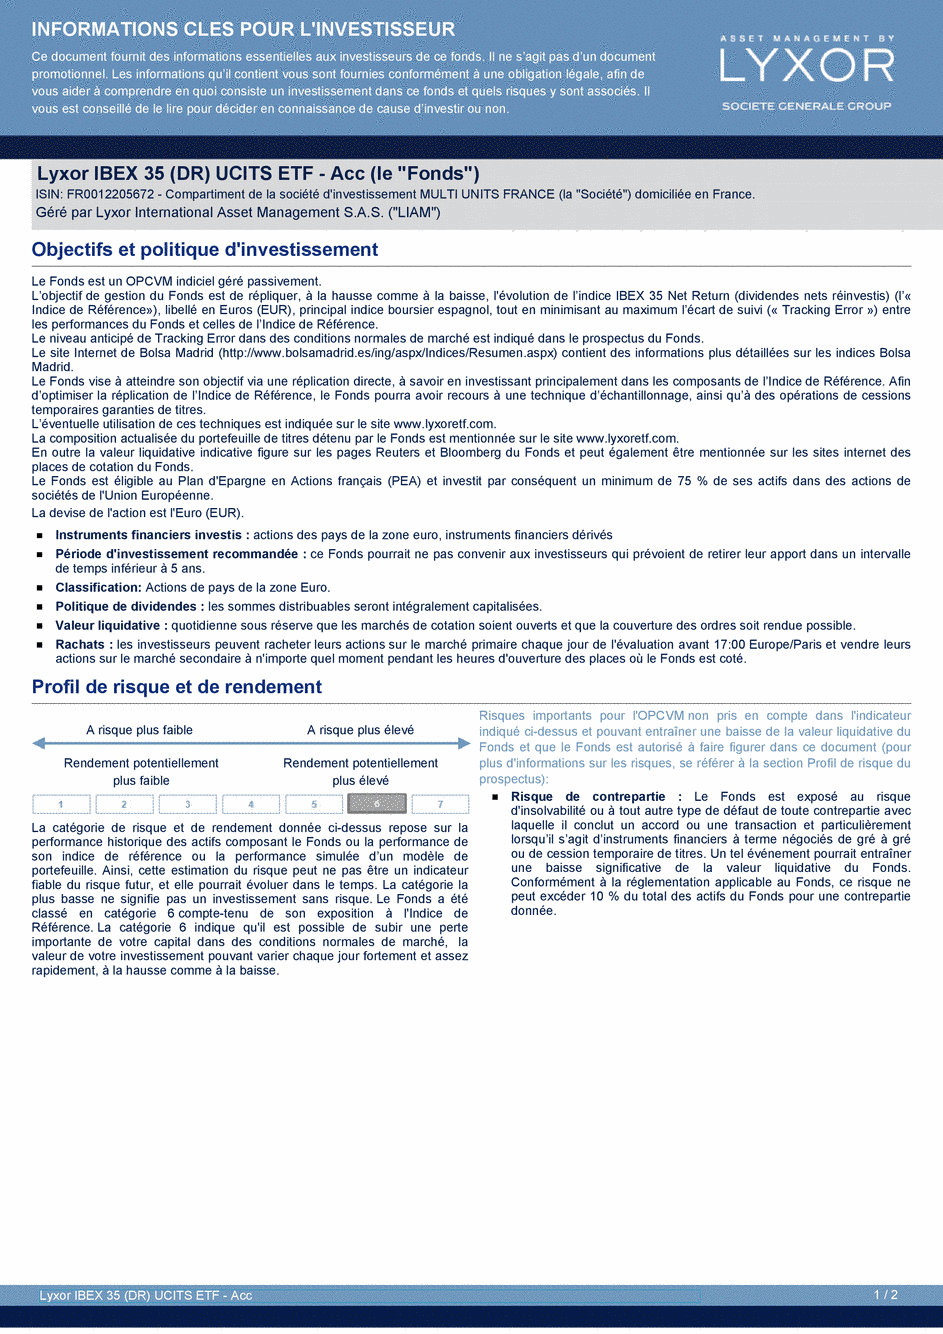 DICI LYXOR IBEX 35 (DR) UCITS ETF (C) - 19/02/2021 - Français